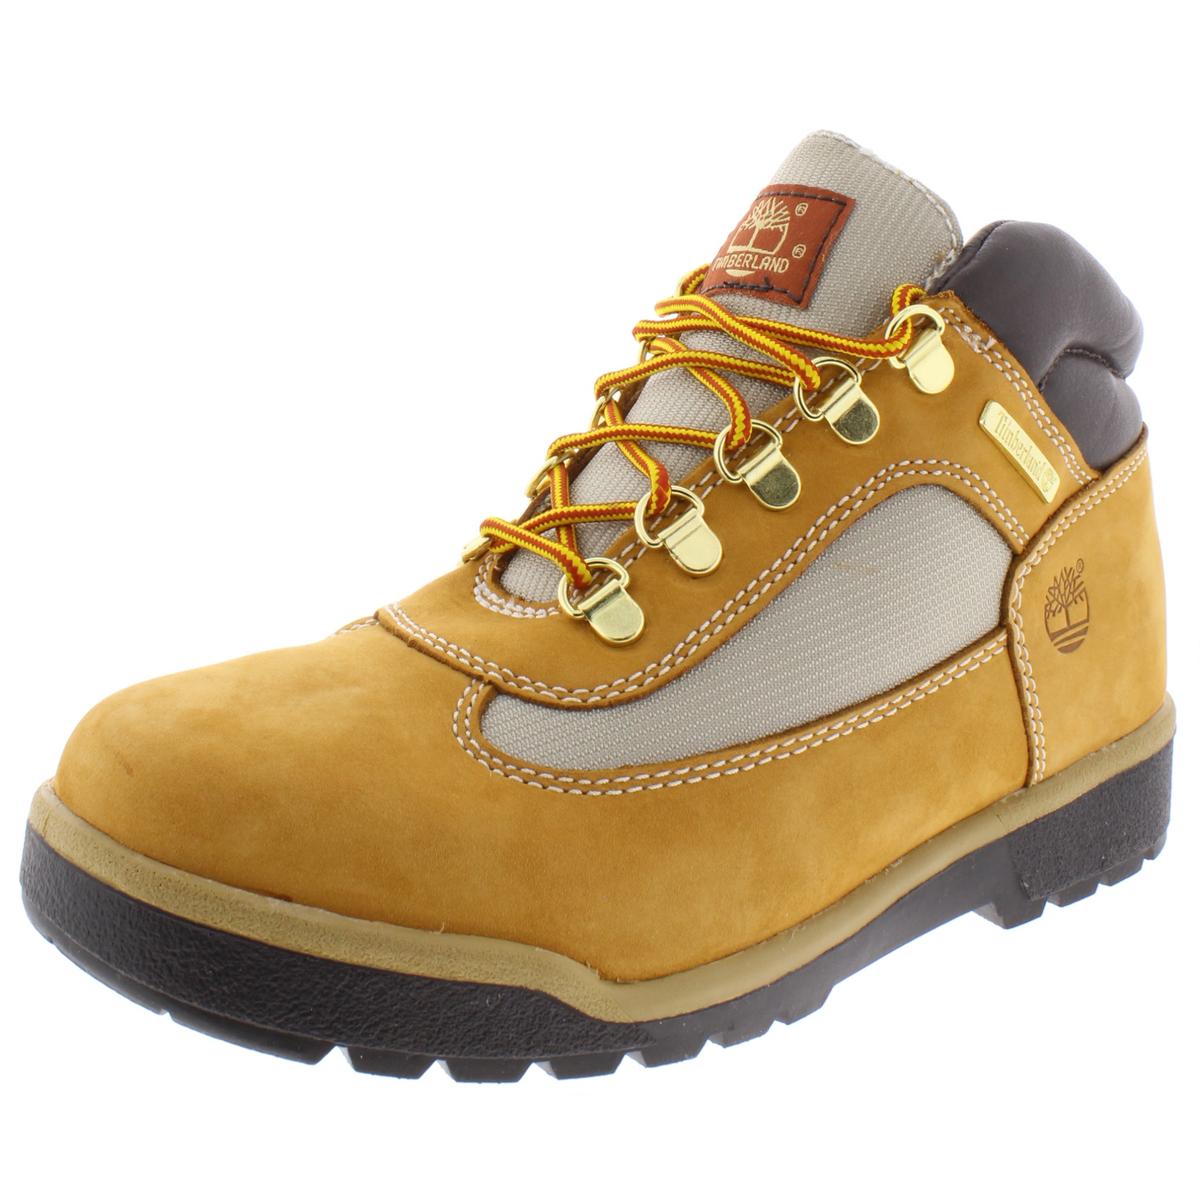 Timberland Boys Field Tan Ankle Boots Shoes 6 Medium (D) Big Kid BHFO